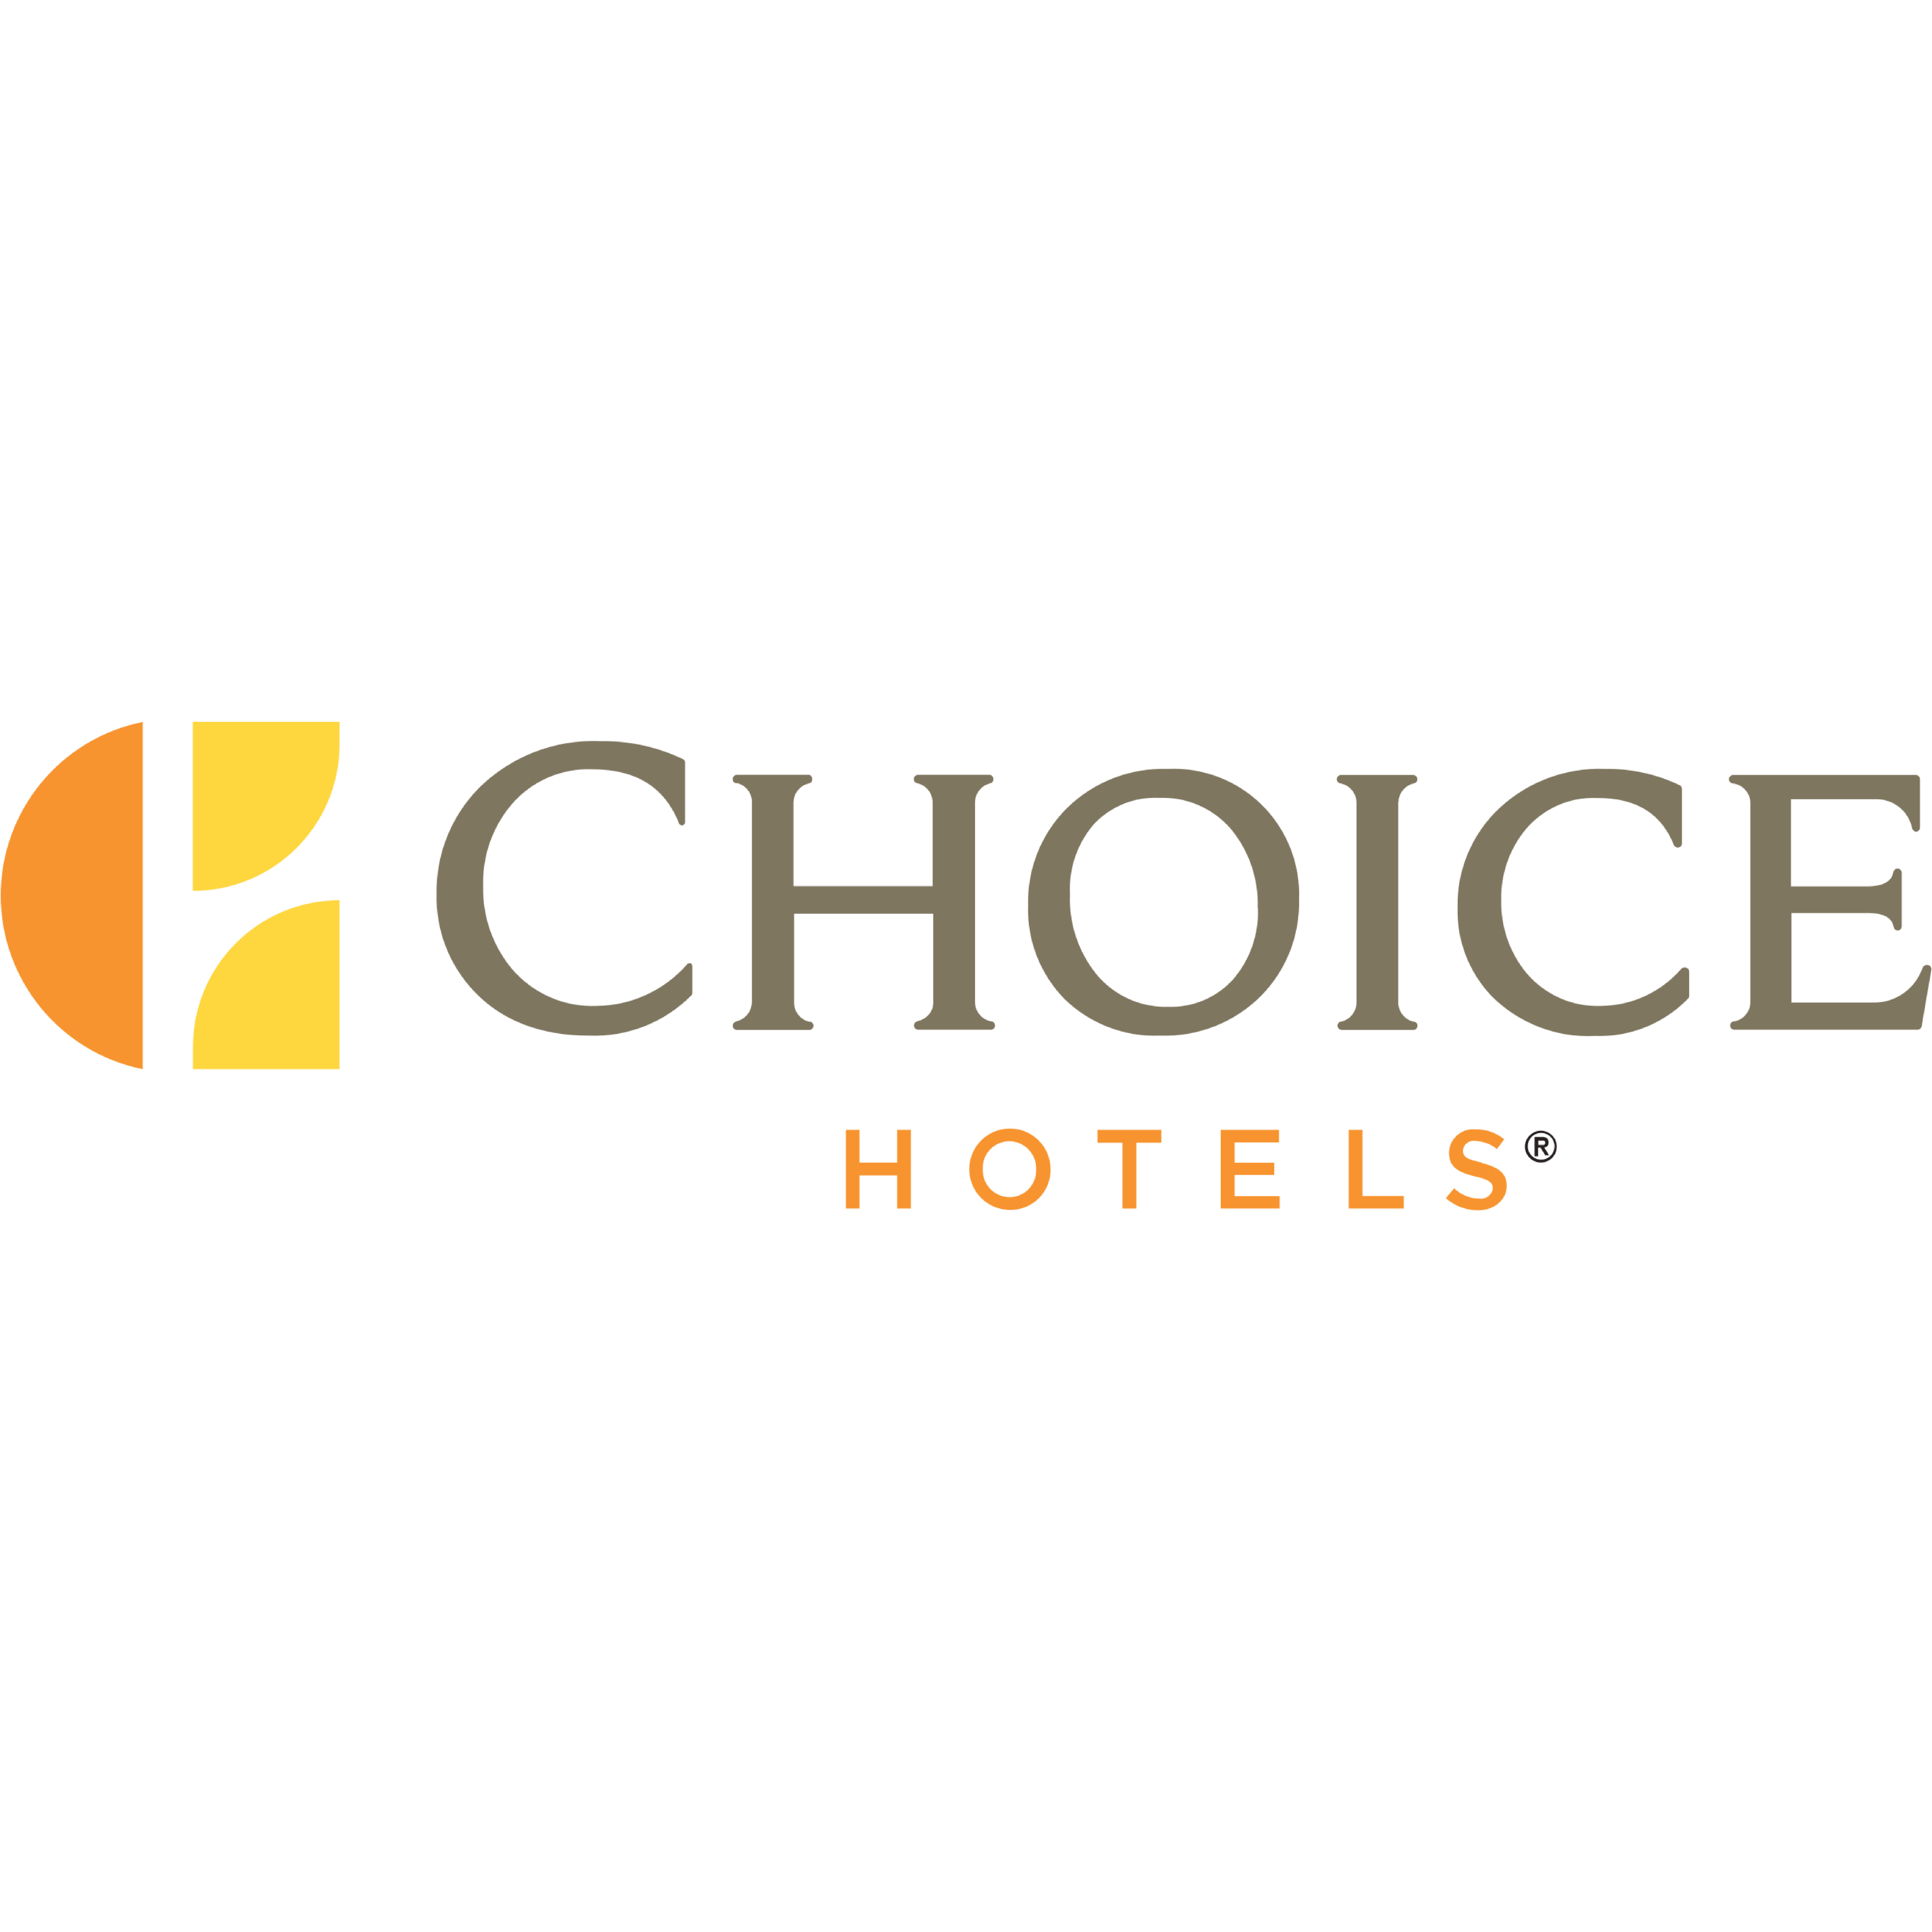 CHOICE-Hotels-LOGO